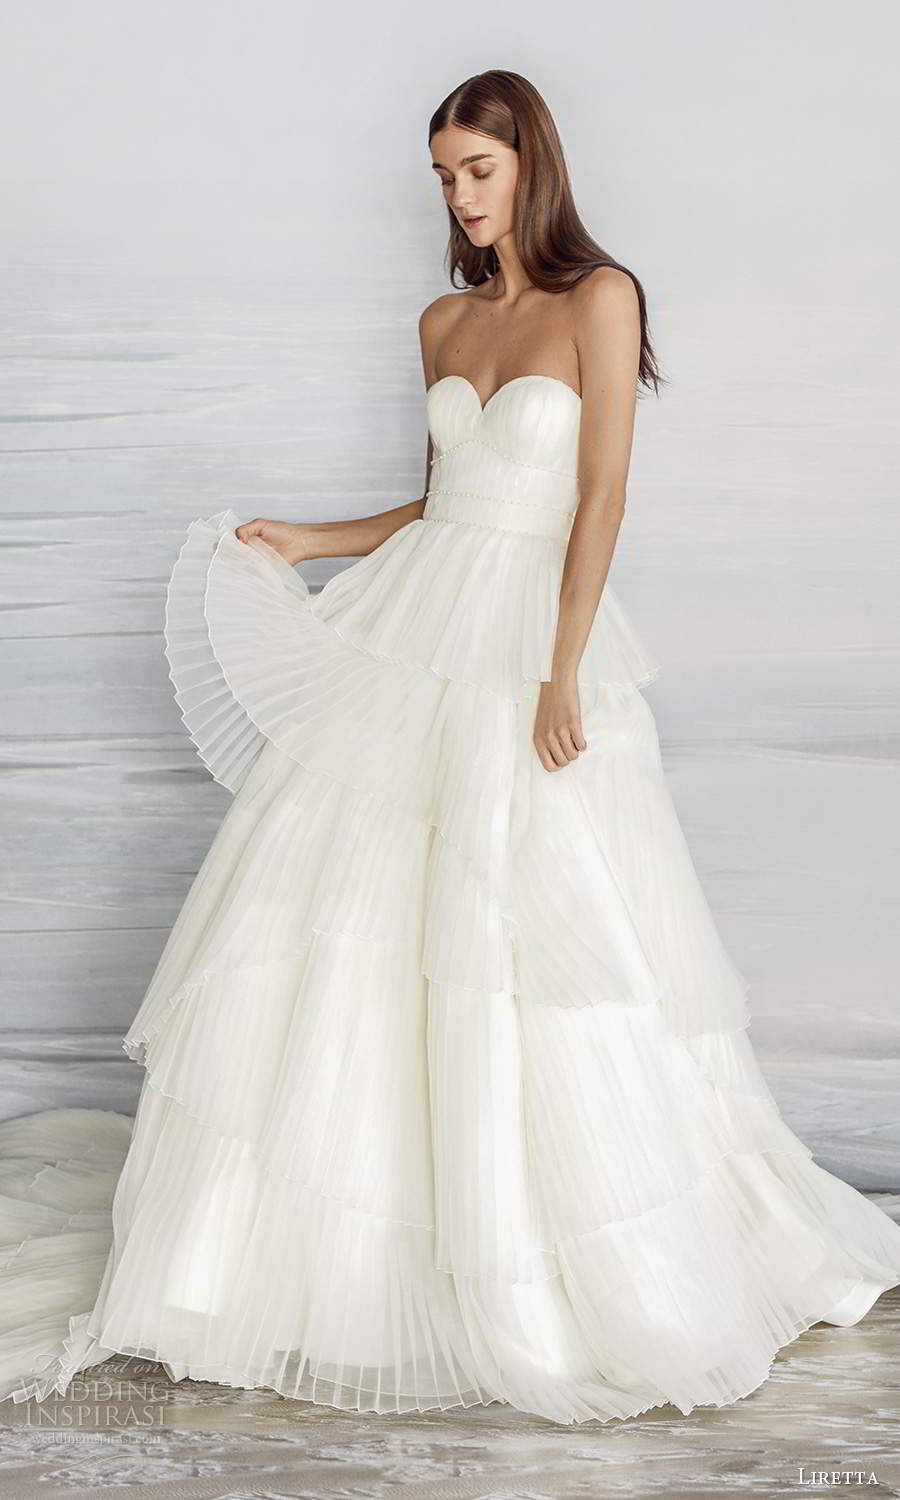 liretta 2021 bridal strapless sweetheart neckline clean minimalist a line ball gown wedding dress chapel train ruffle skirt (2) mv